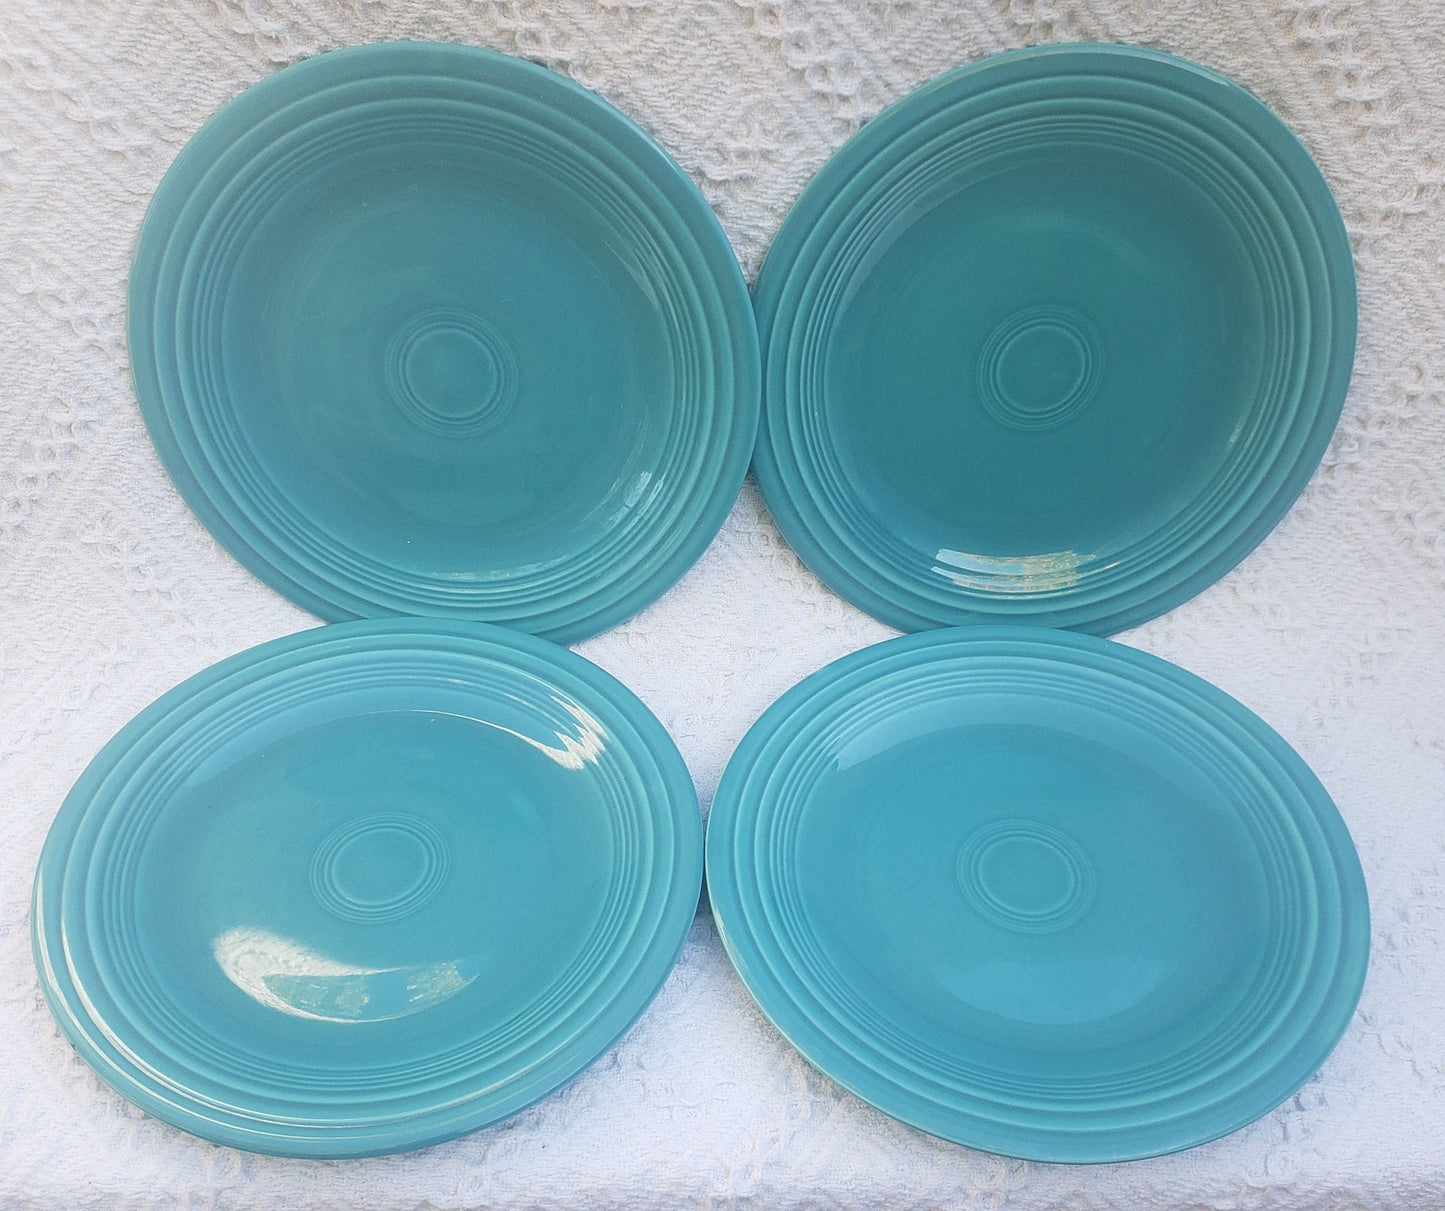 Set of 4 Vintage Fiesta Pottery 10" Dinner Plates in Original Turquoise Glaze